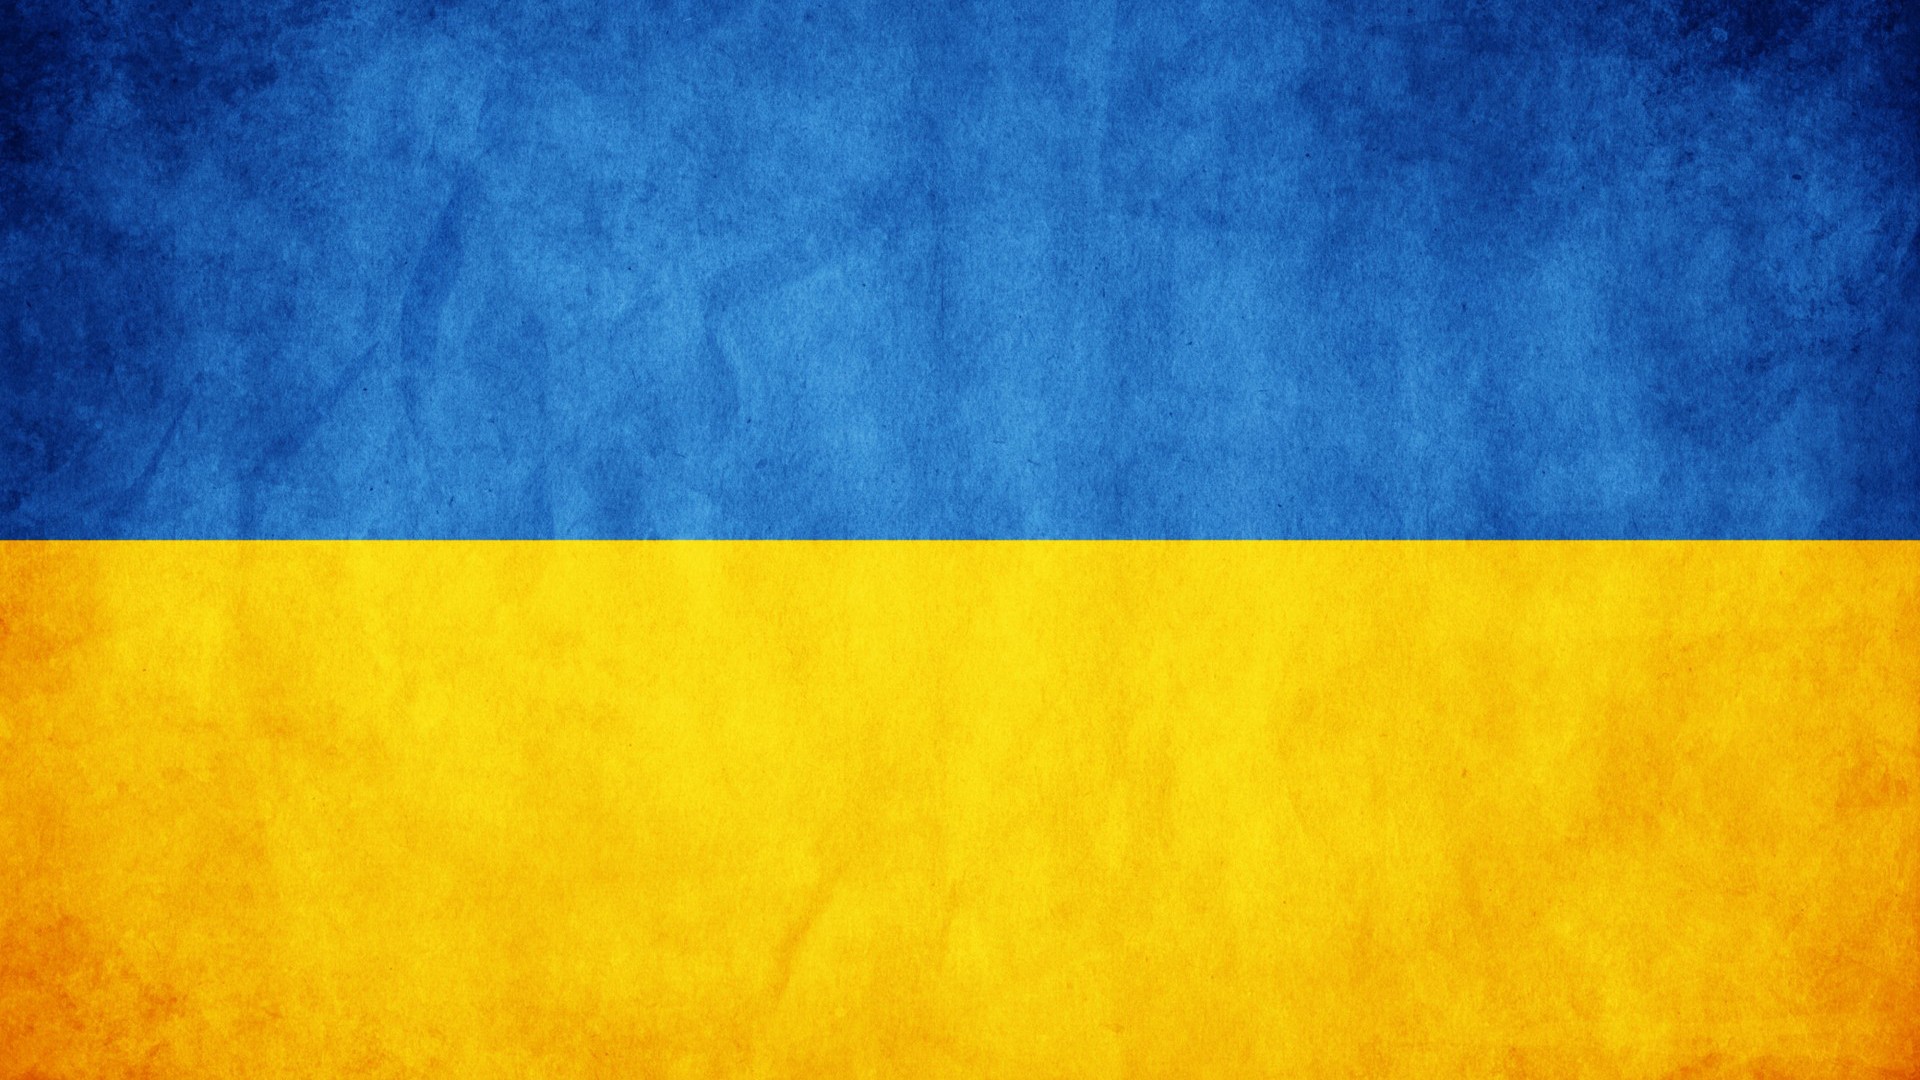 General 1920x1080 Ukraine flag yellow blue abstract flag of Ukraine